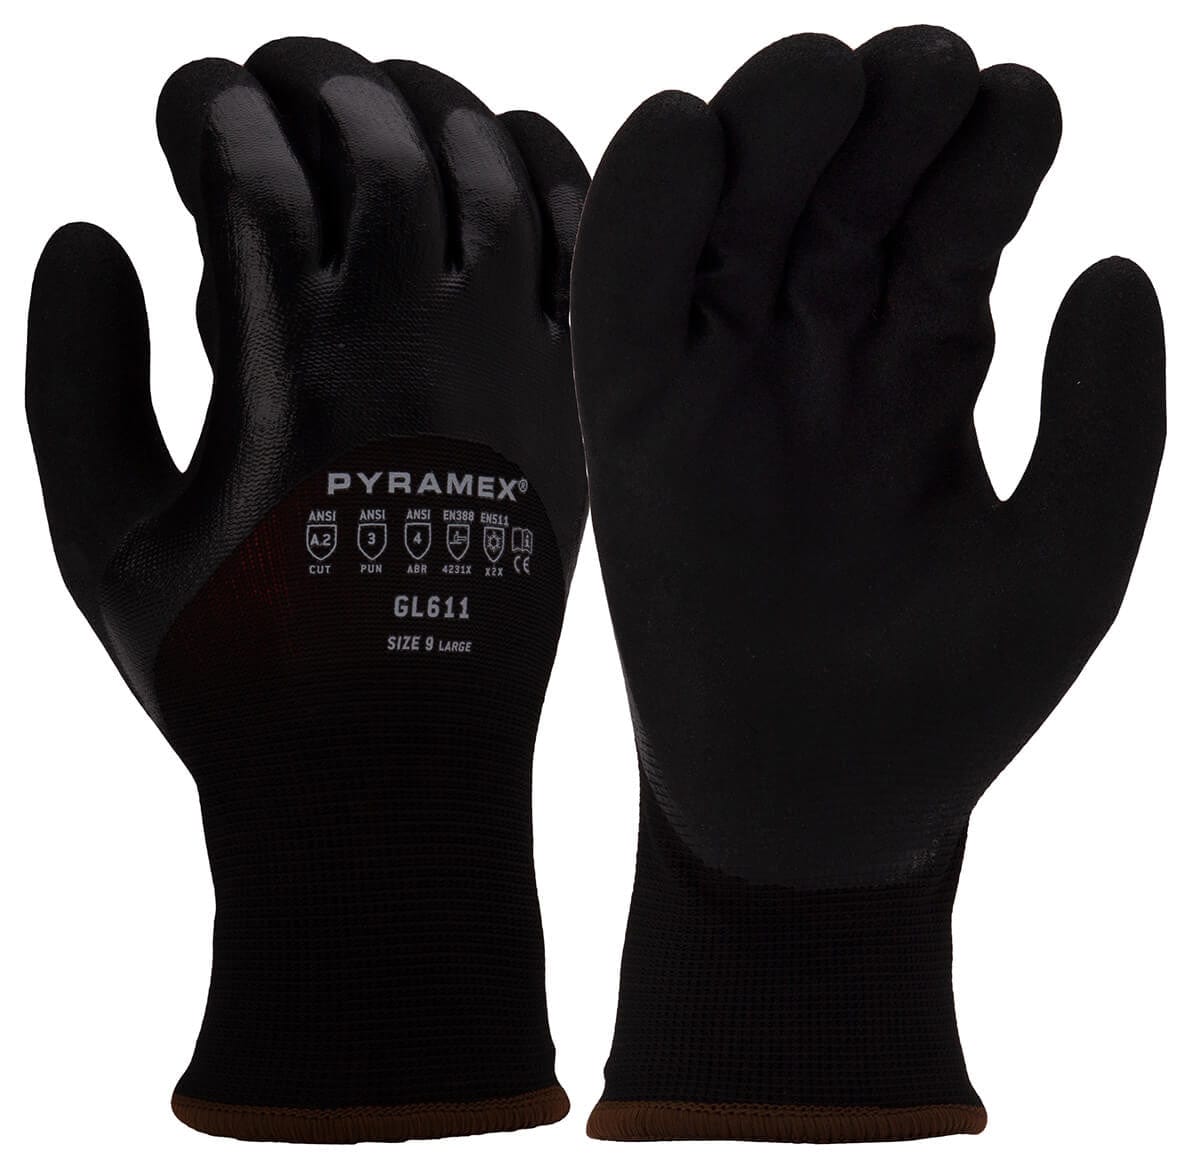 Pyramex GL611 Winter Cut-Resistant Gloves